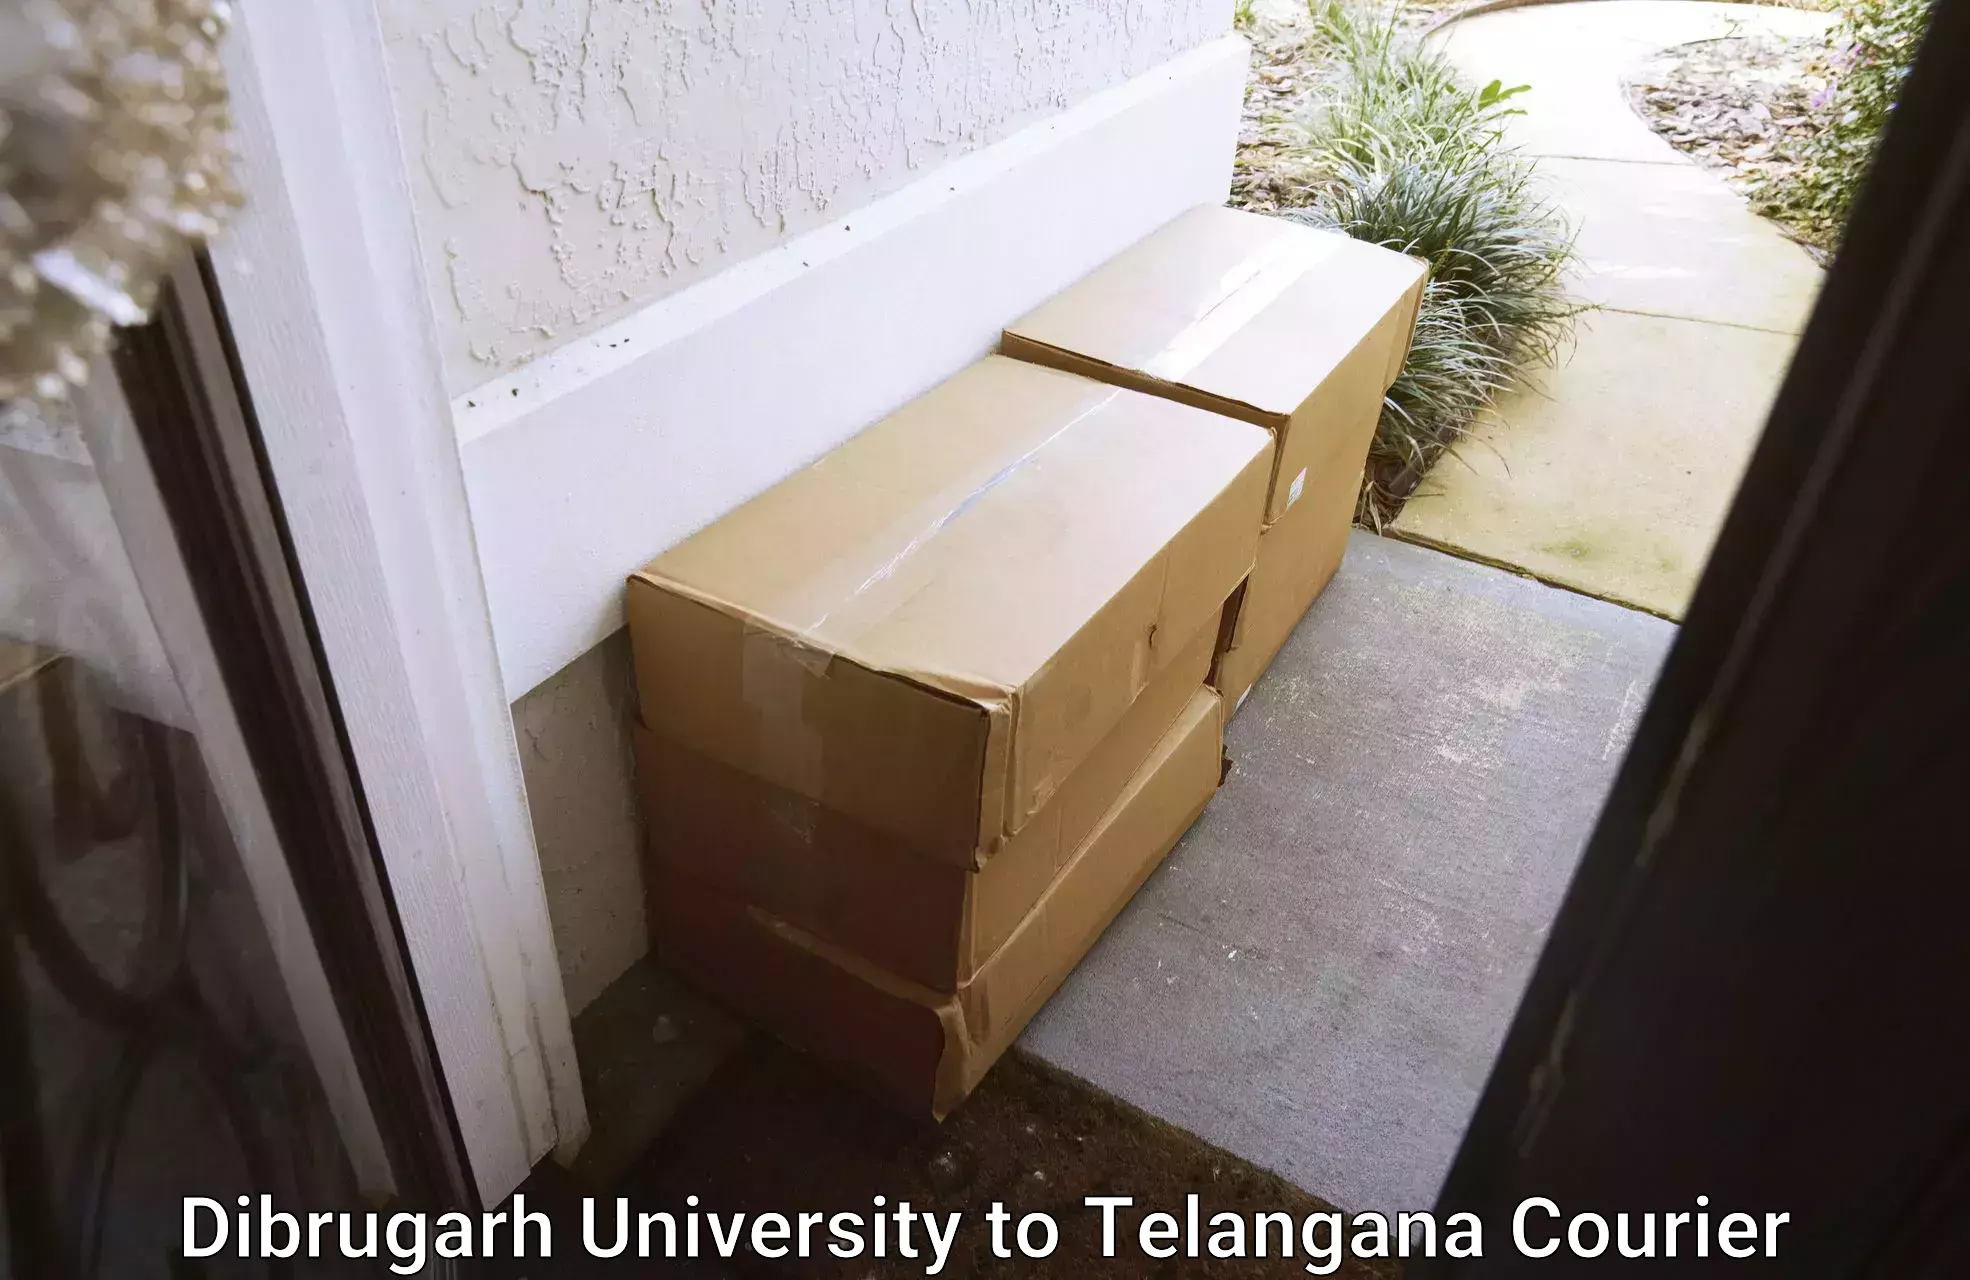 Multi-city courier Dibrugarh University to Pathipaka